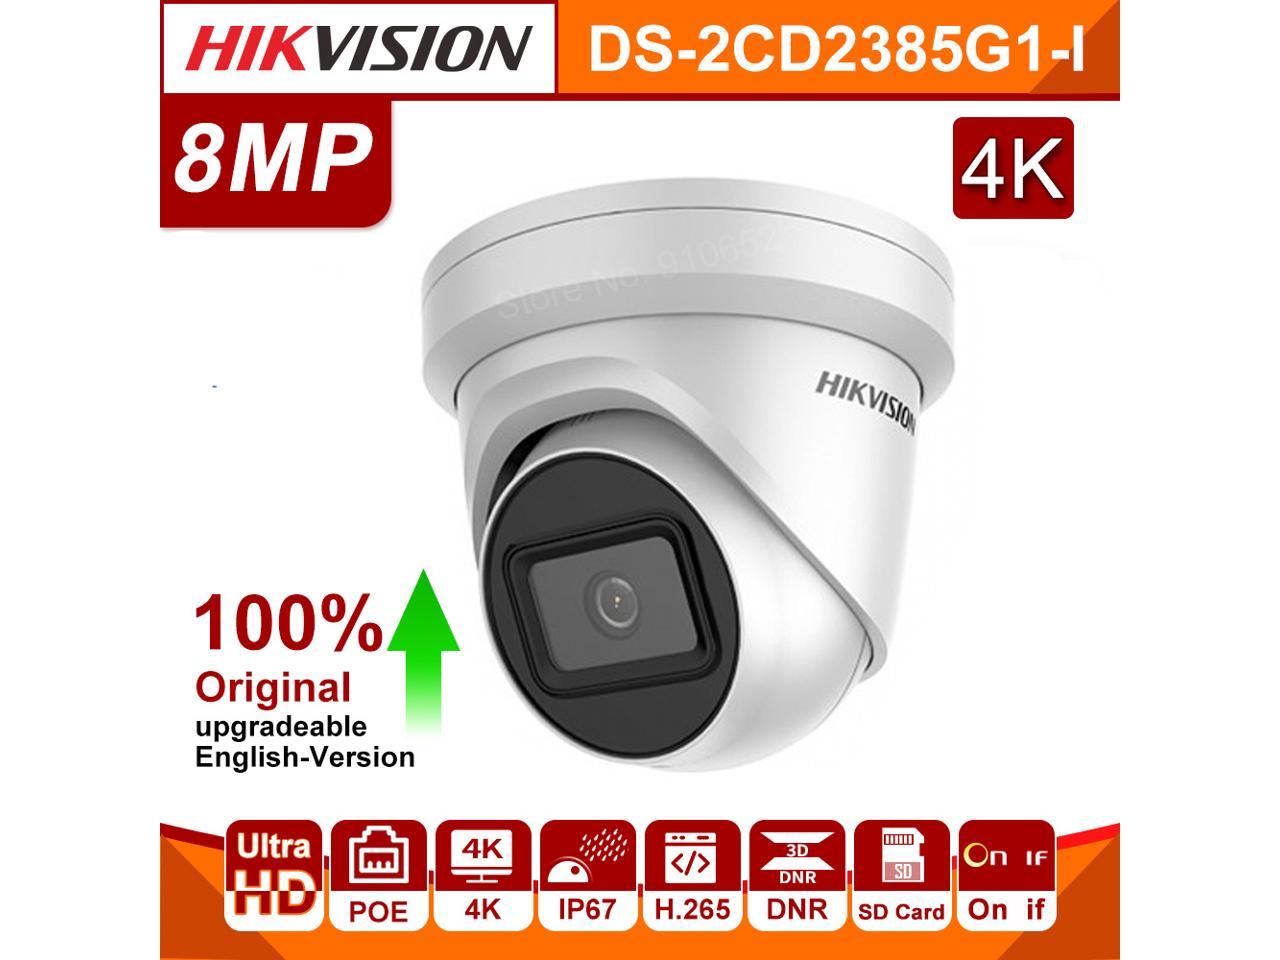 Hikvision DS-2CD2385G1-I White 8PM 4K IP POE CCTV Dome 30M IR IP67 Turret Camera 